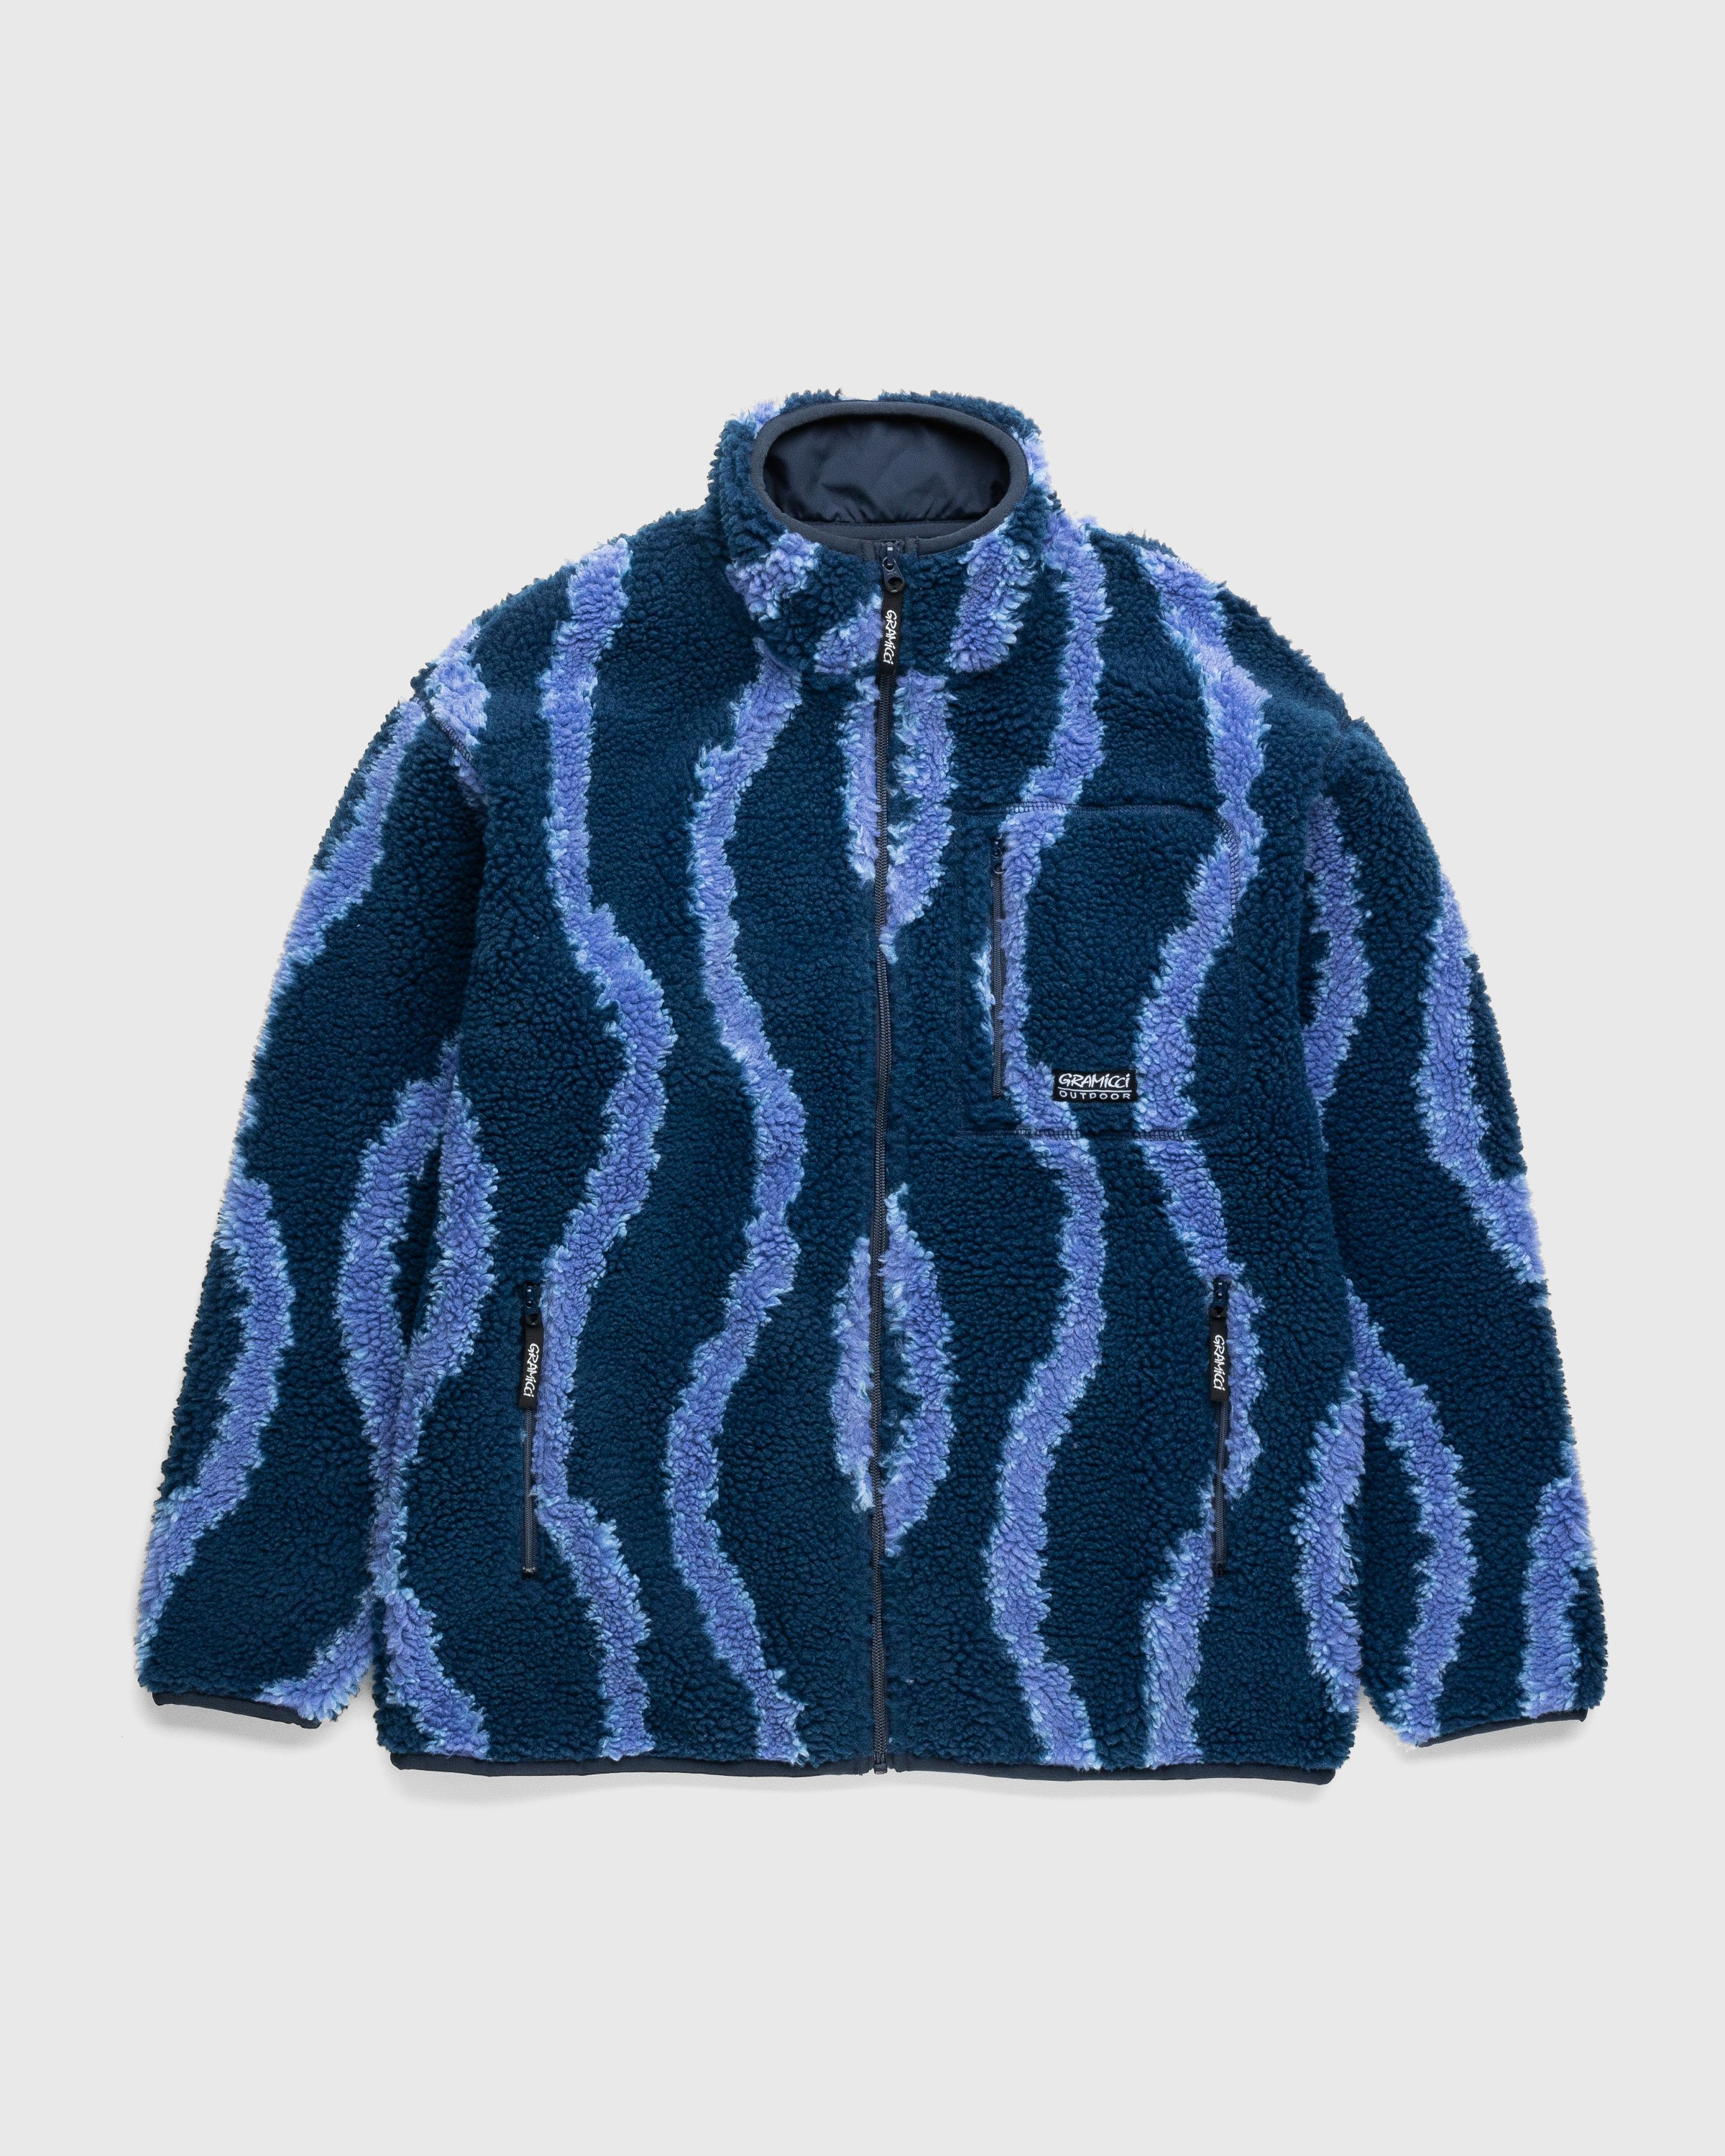 Gramicci - Sherpa Jacket Navy Swirl - Clothing - Blue - Image 1